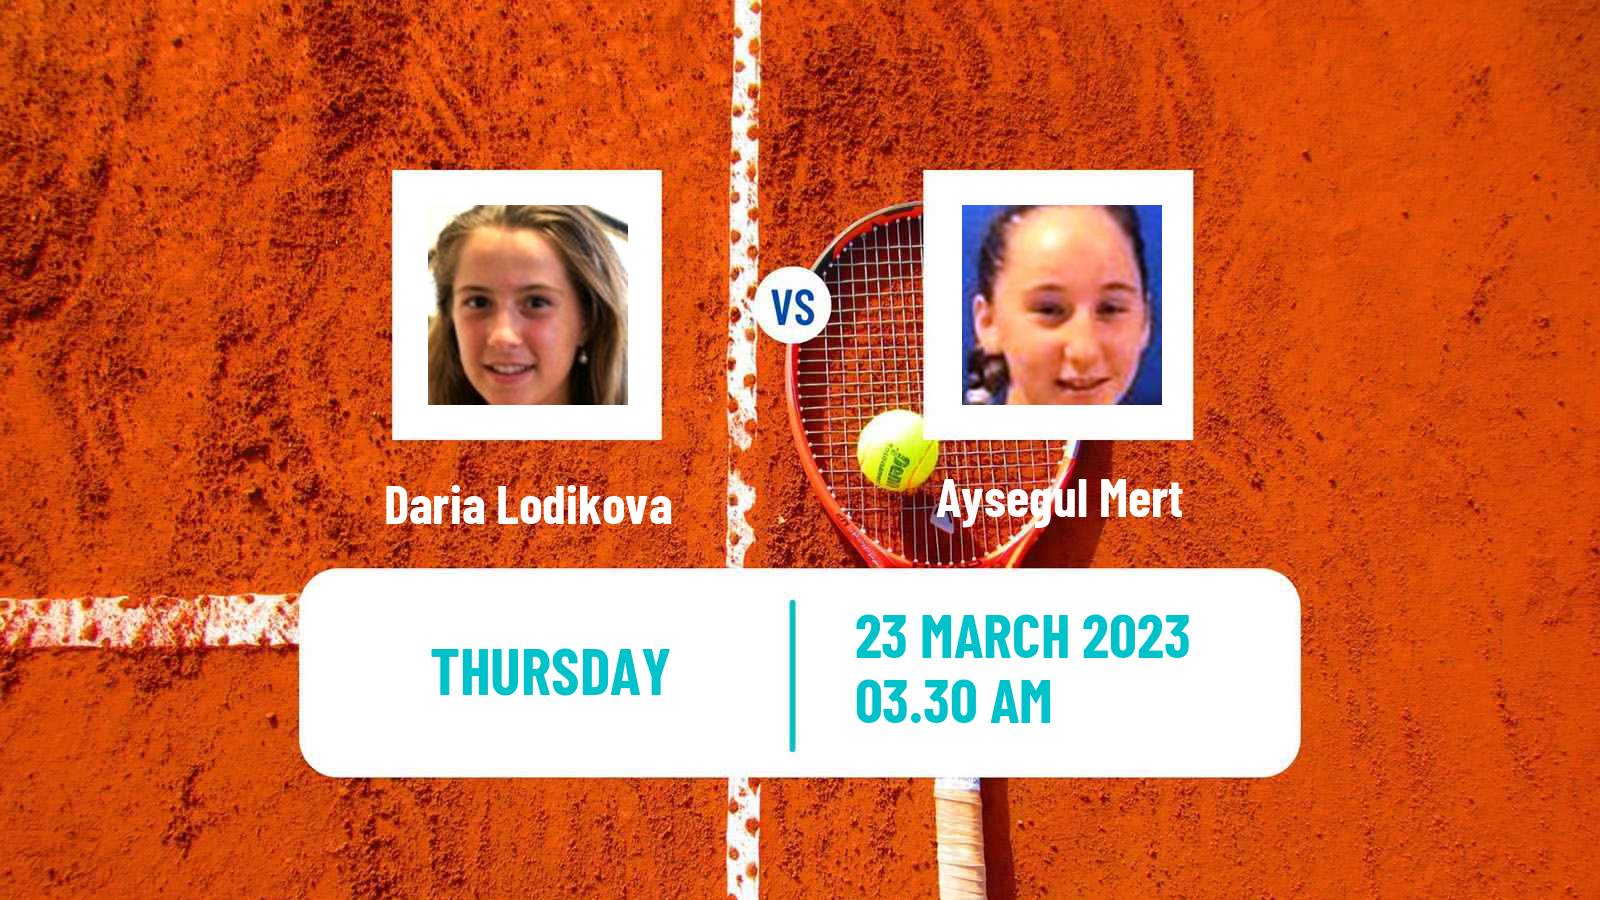 Tennis ITF Tournaments Daria Lodikova - Aysegul Mert